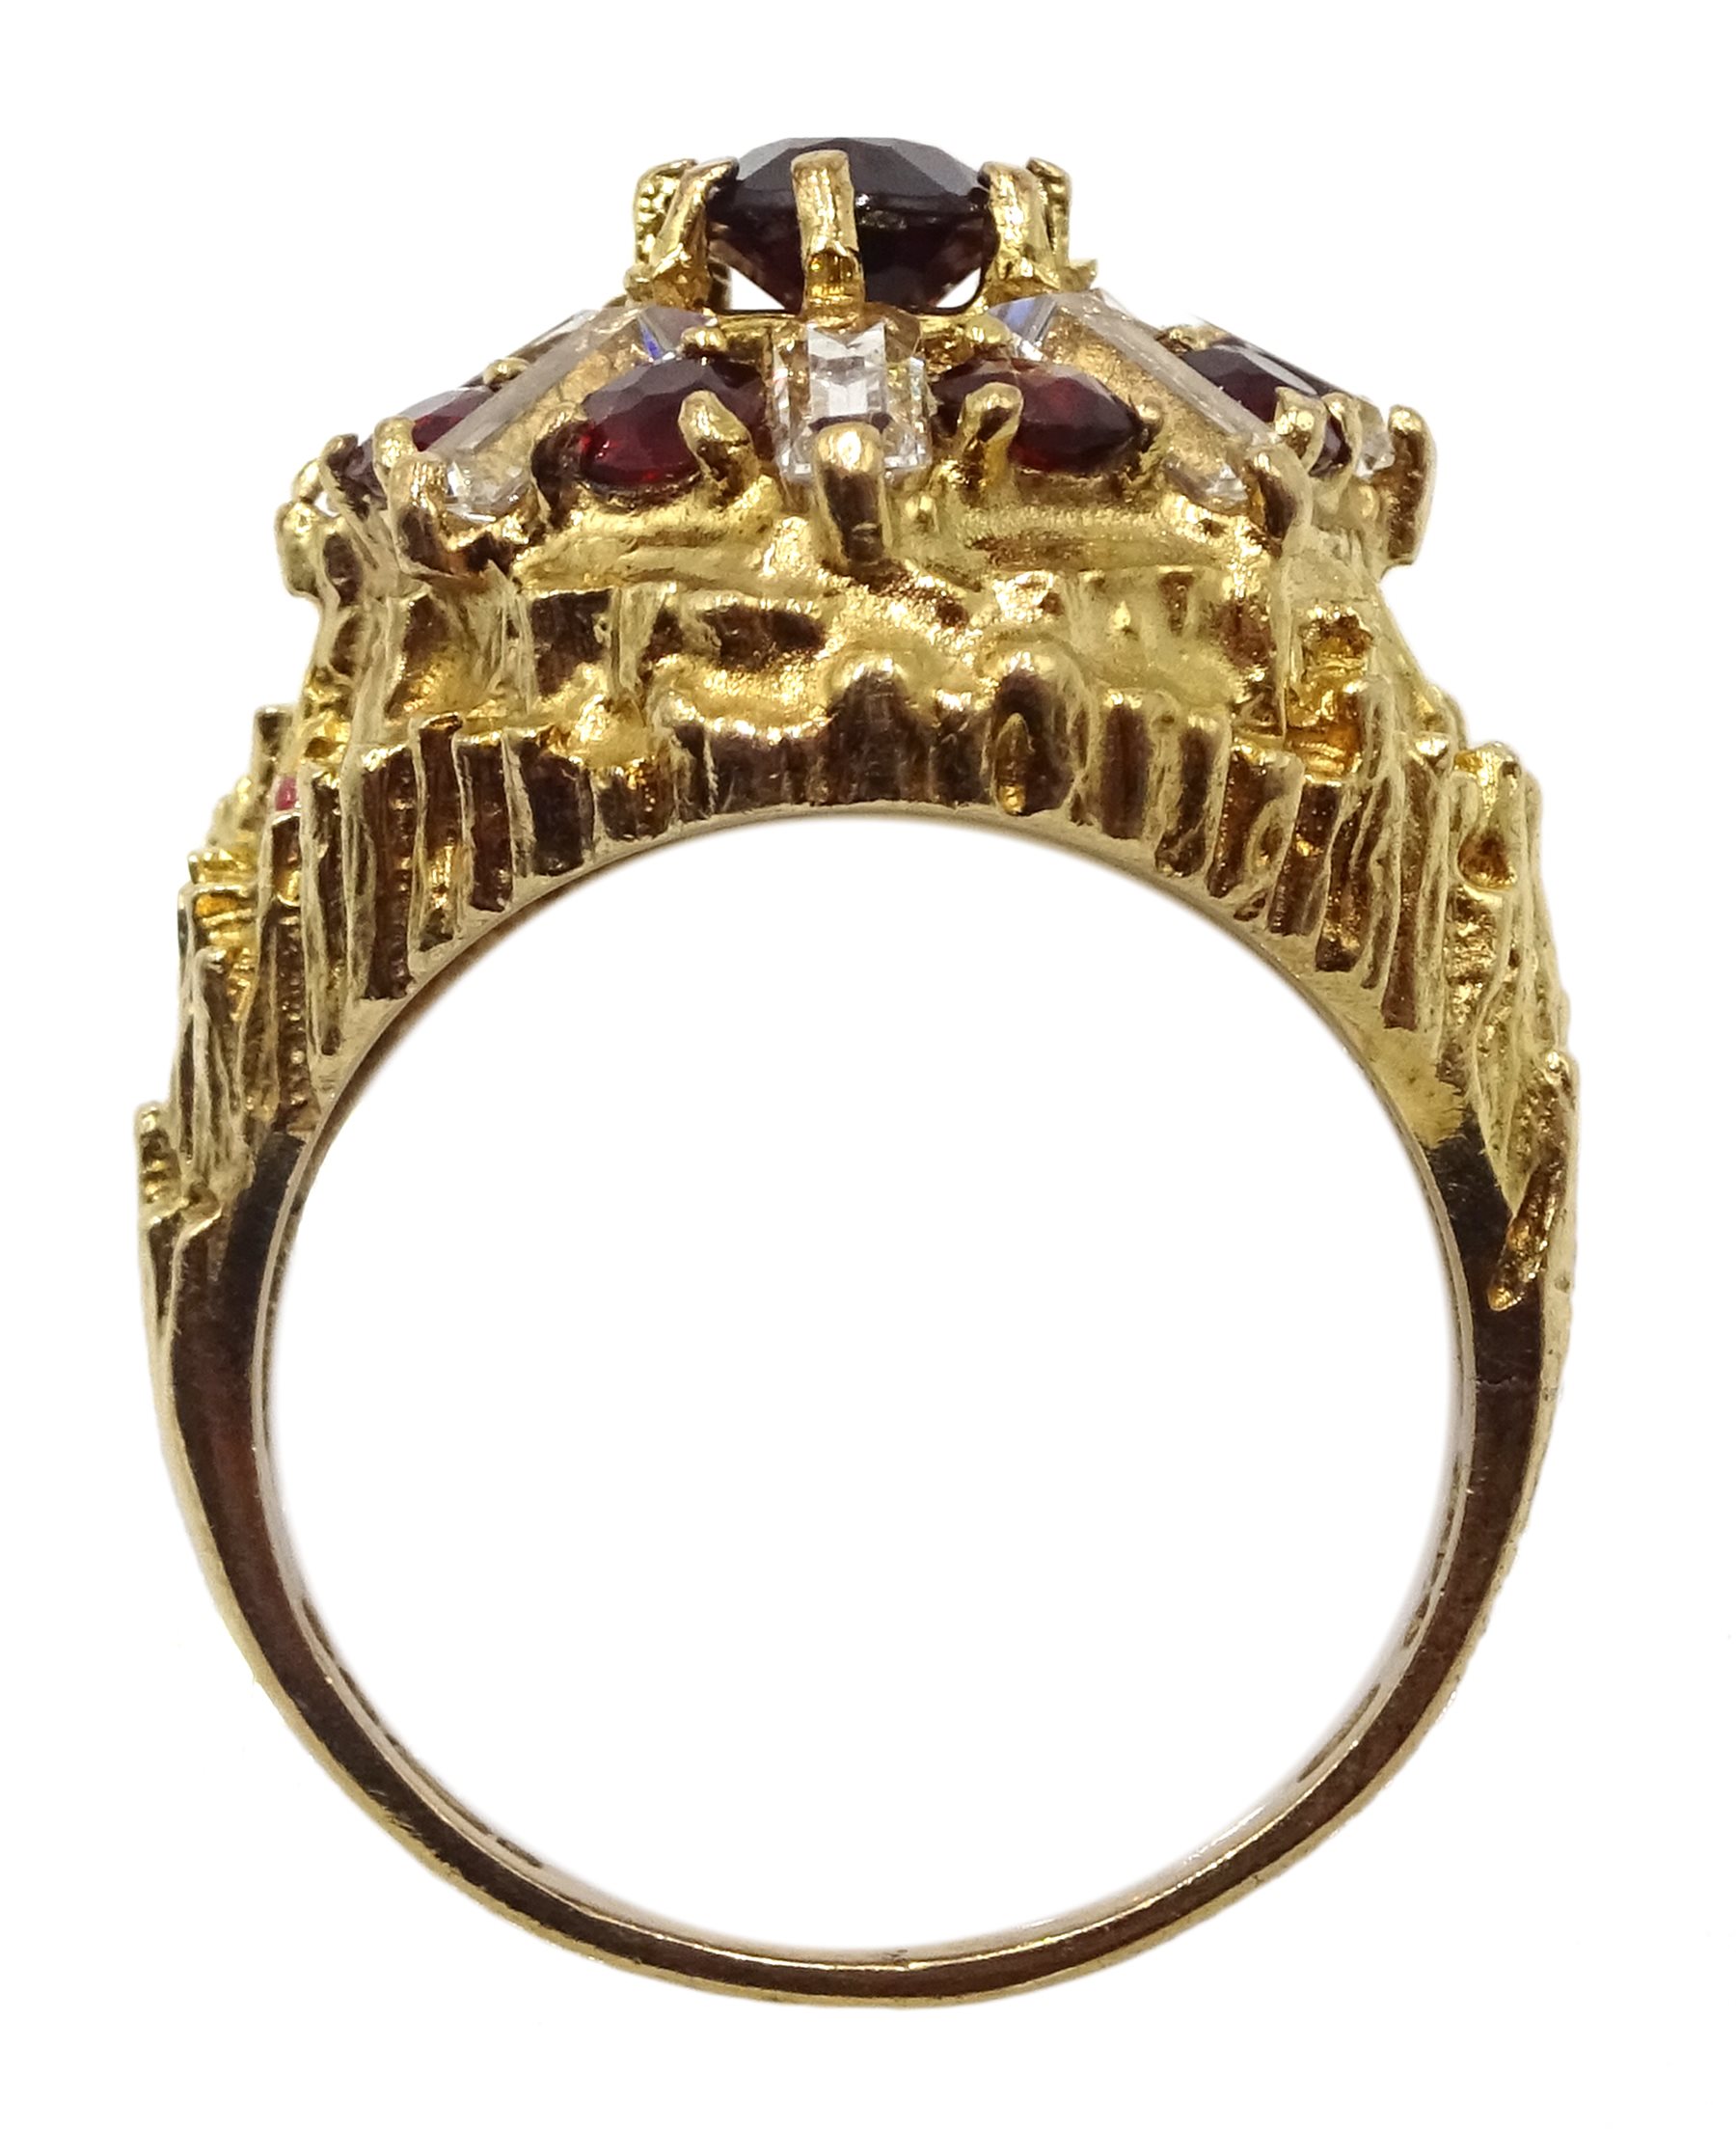 9ct gold garnet and cubic zirconia dress ring, hallmkared - Image 5 of 5